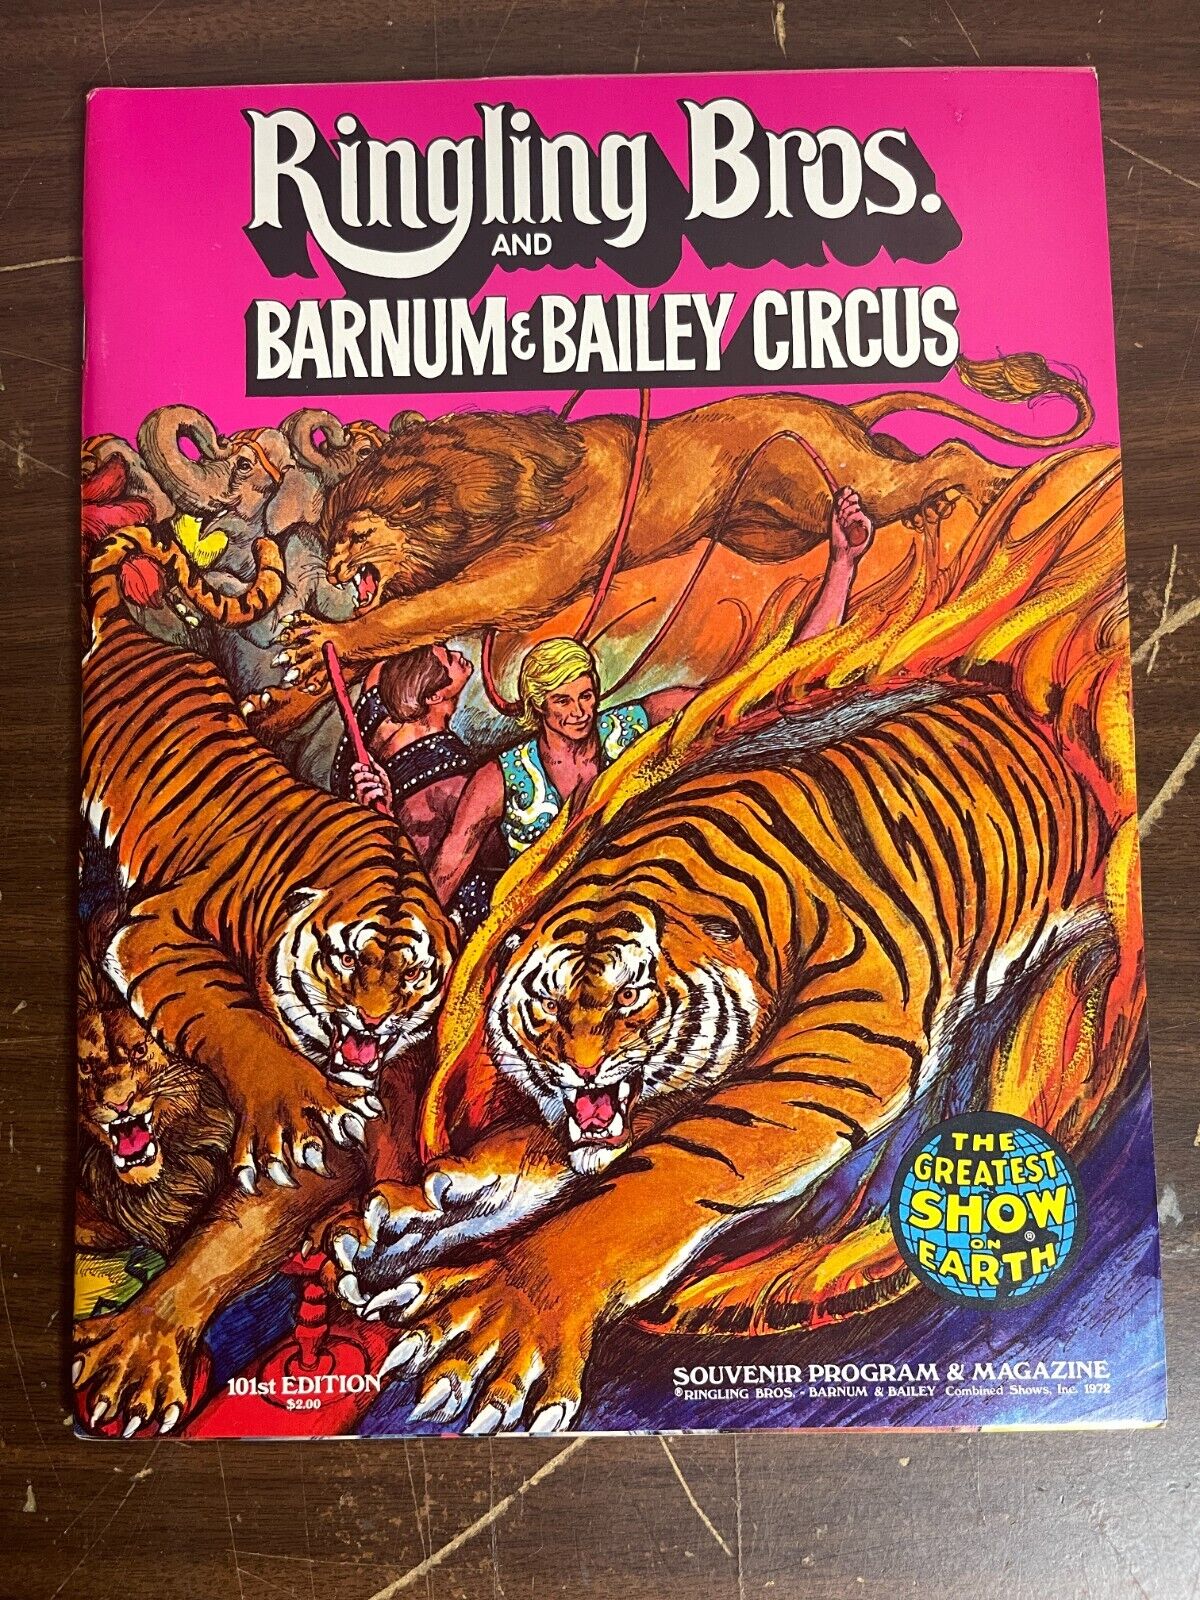 Ringling Bros And Barnum & Bailey Circus 101st Ed Souvenir Program/Magazine 1971